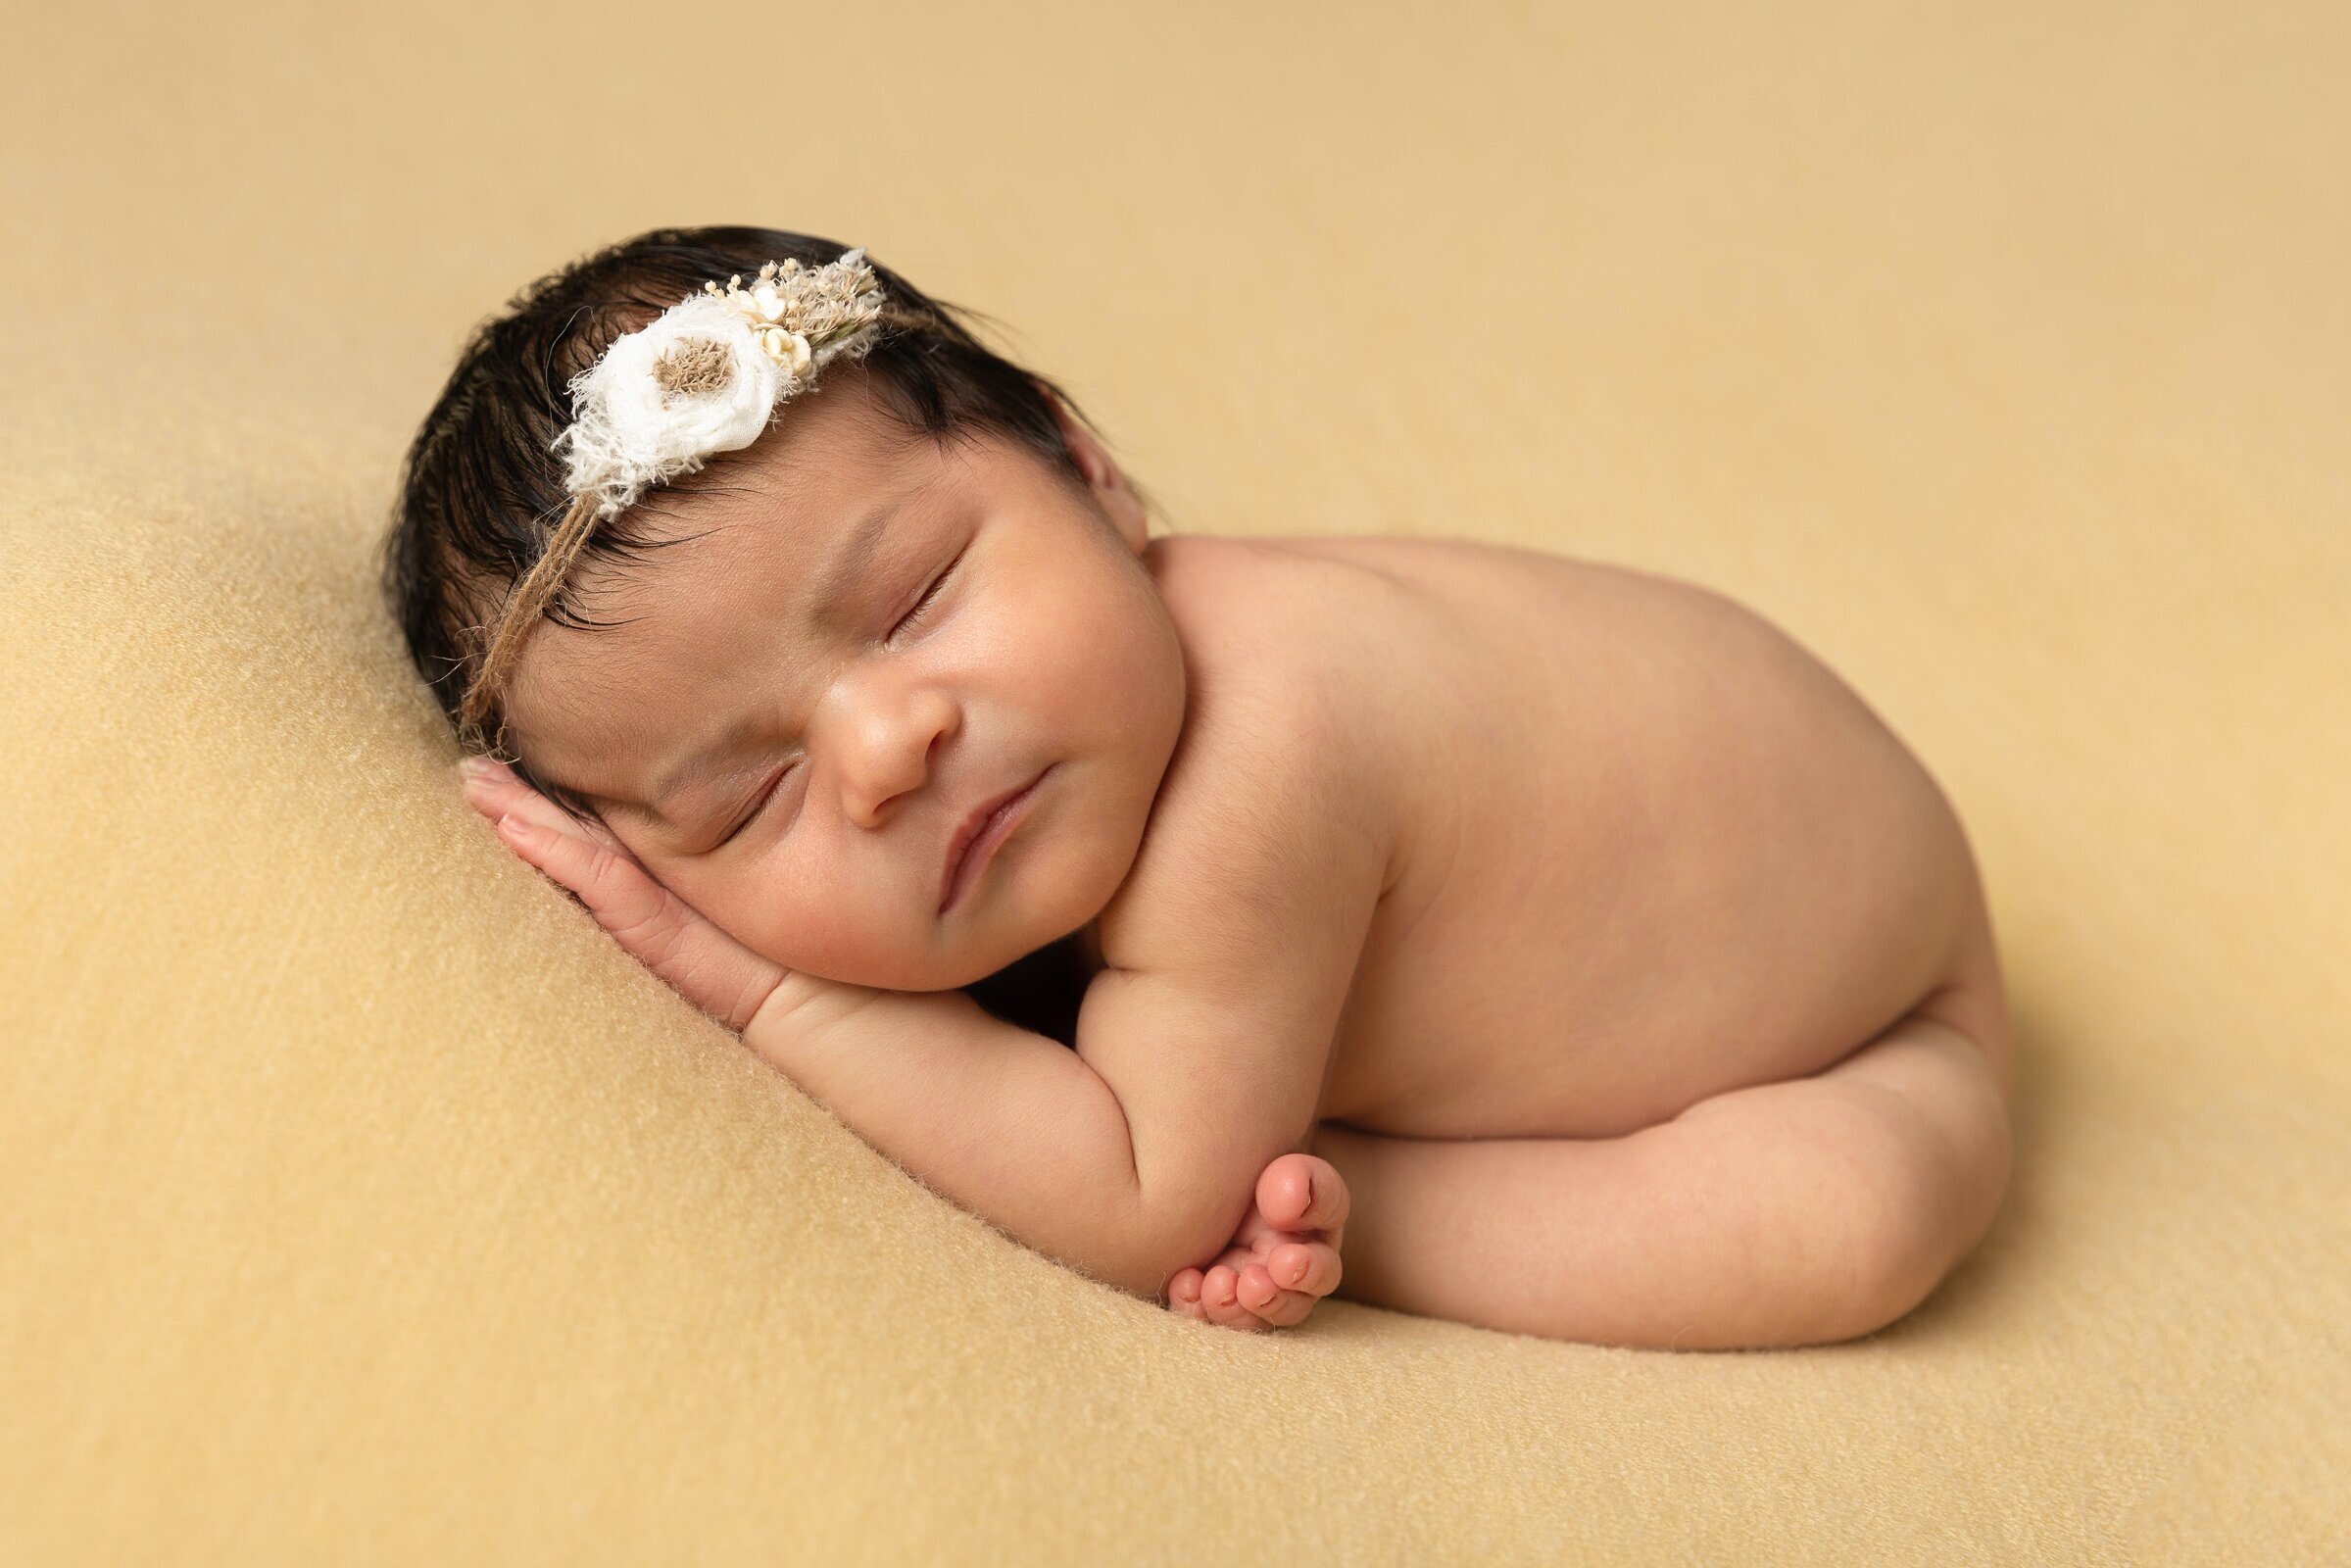 newborn-baby-with-headband-taco-pose-on-yellow-background